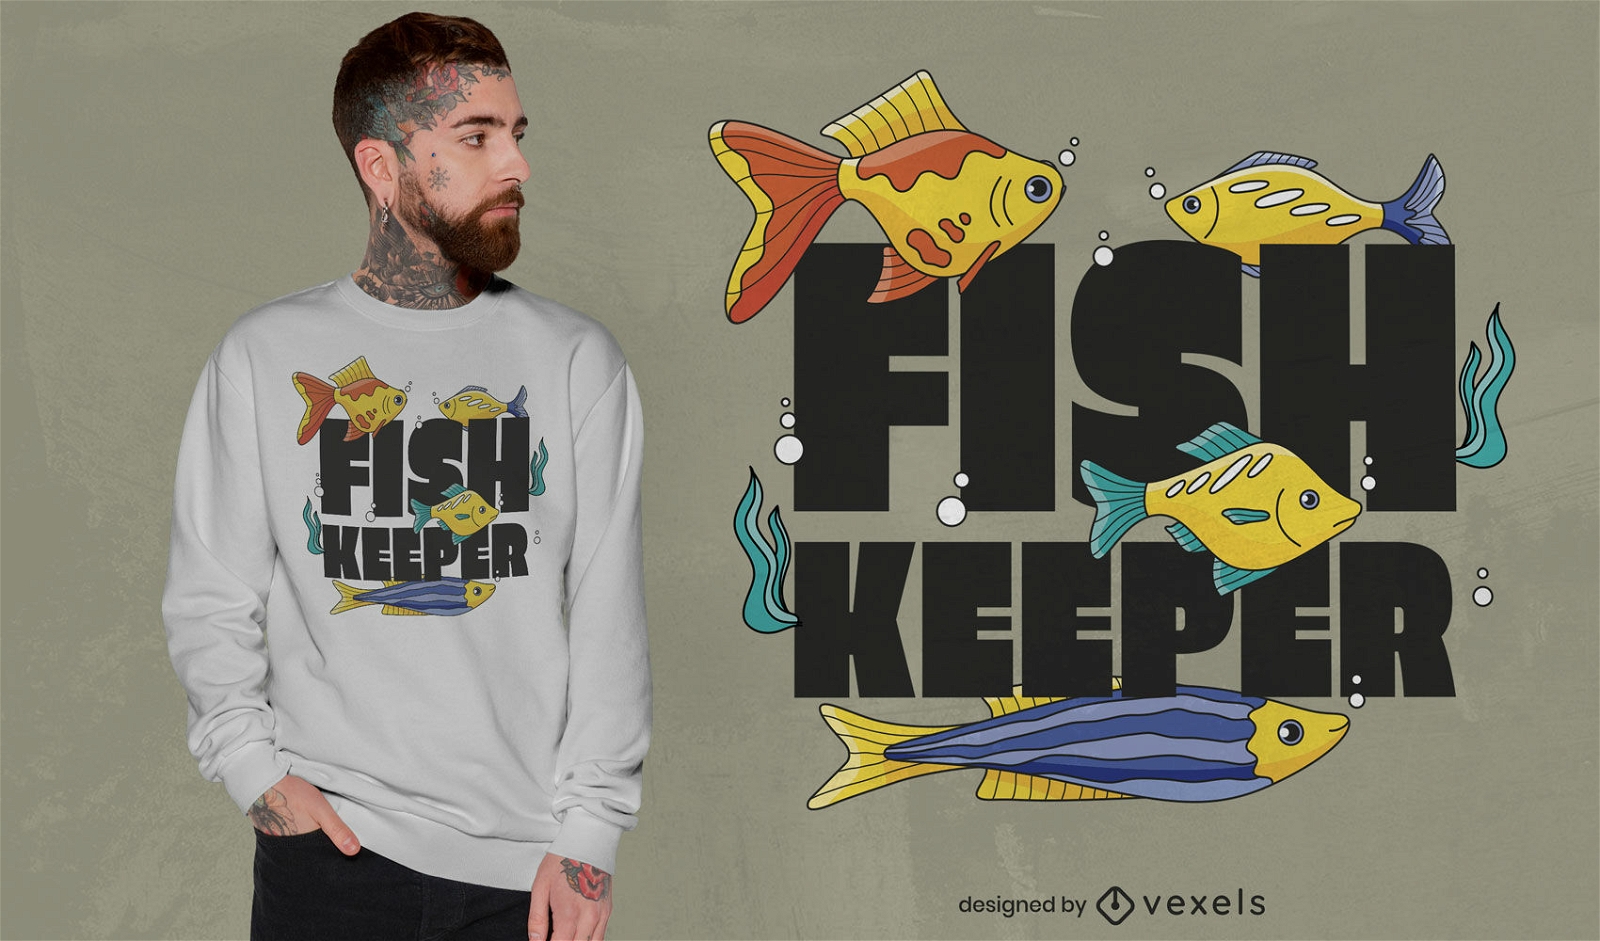 https://images.vexels.com/content/282141/preview/fish-keeper-t-shirt-design-02ce4f.png